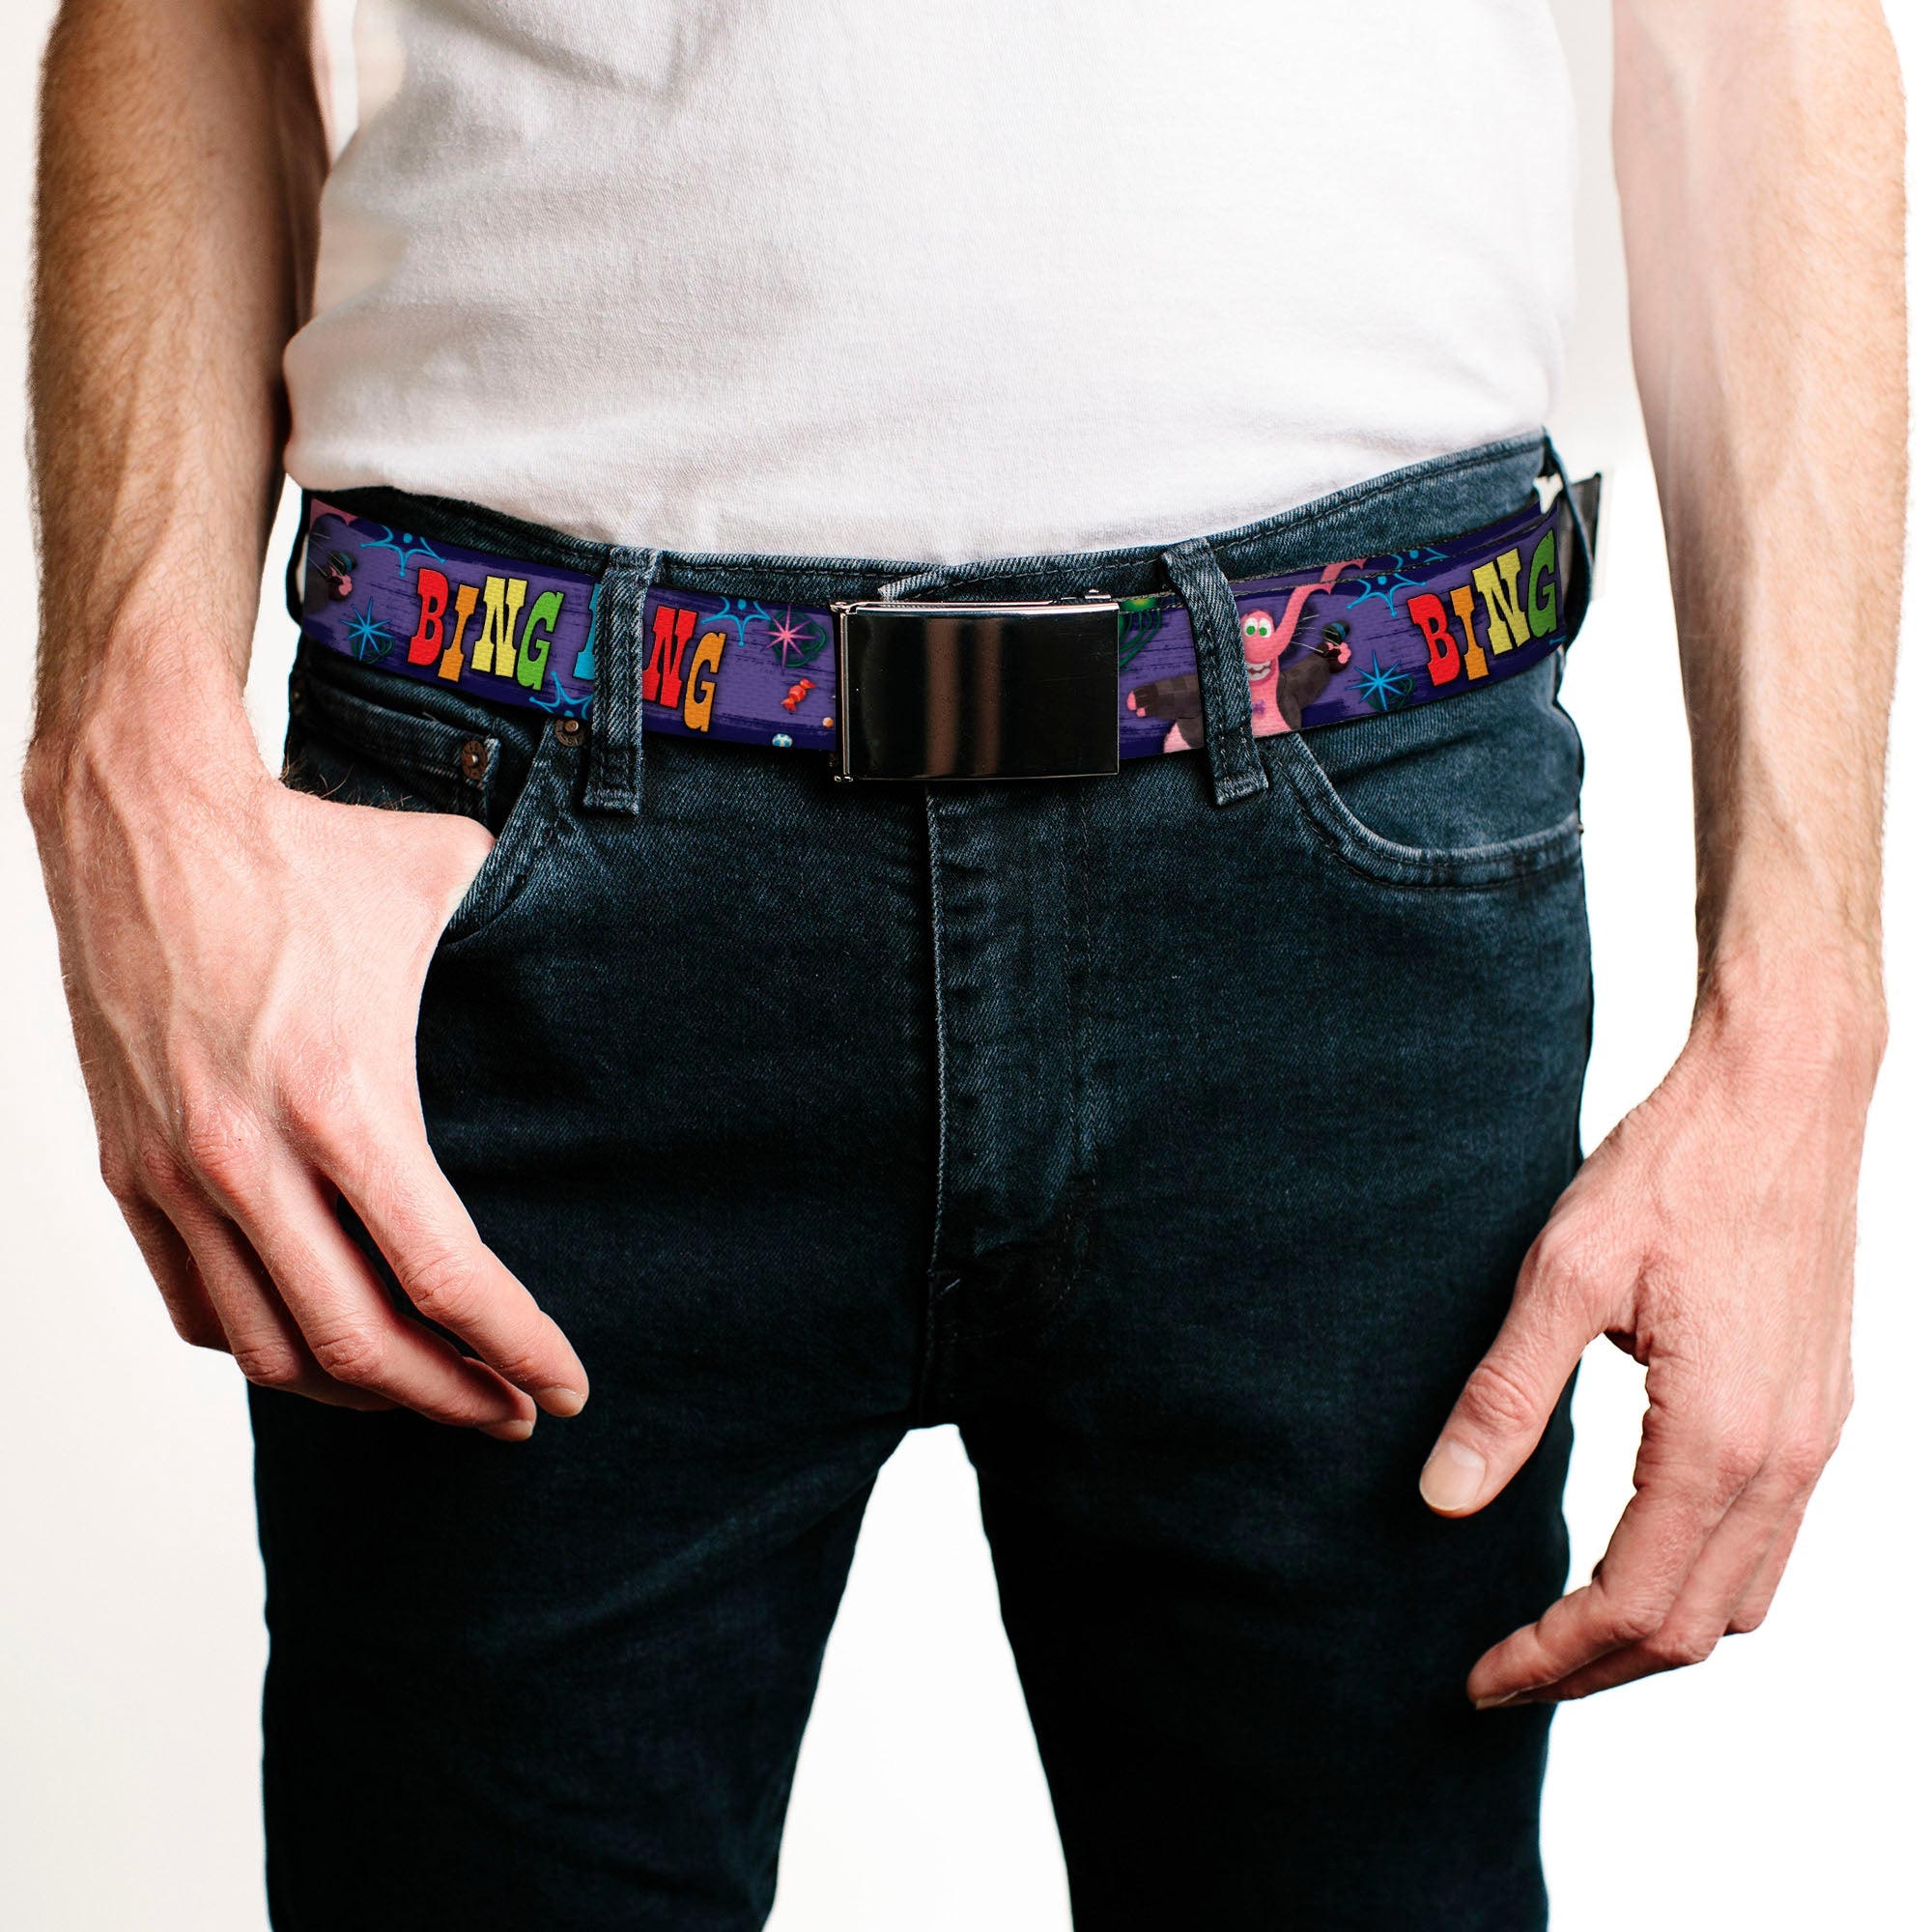 Black Buckle Web Belt - BING BONG Poses/Candy Purples/Multi Color Webbing